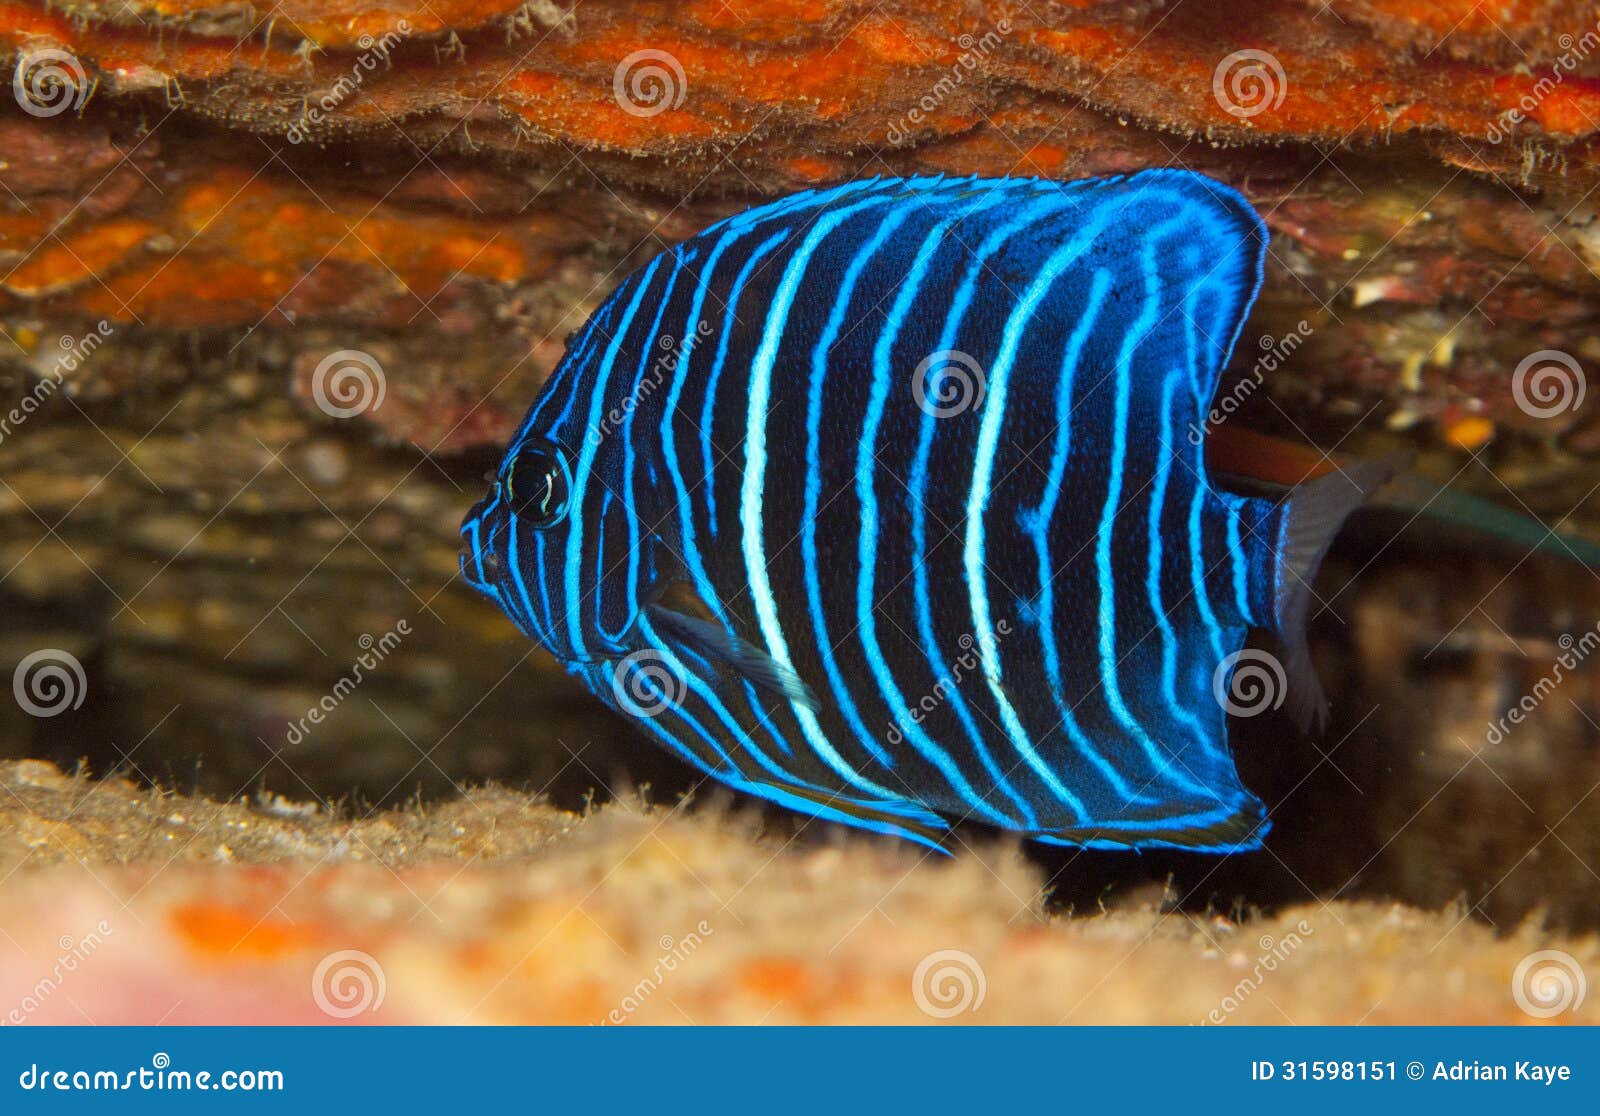 Bluering angelfish stock image. Image of stripe, fish - 24045333 | Angel  fish, Fish chart, Fish pet